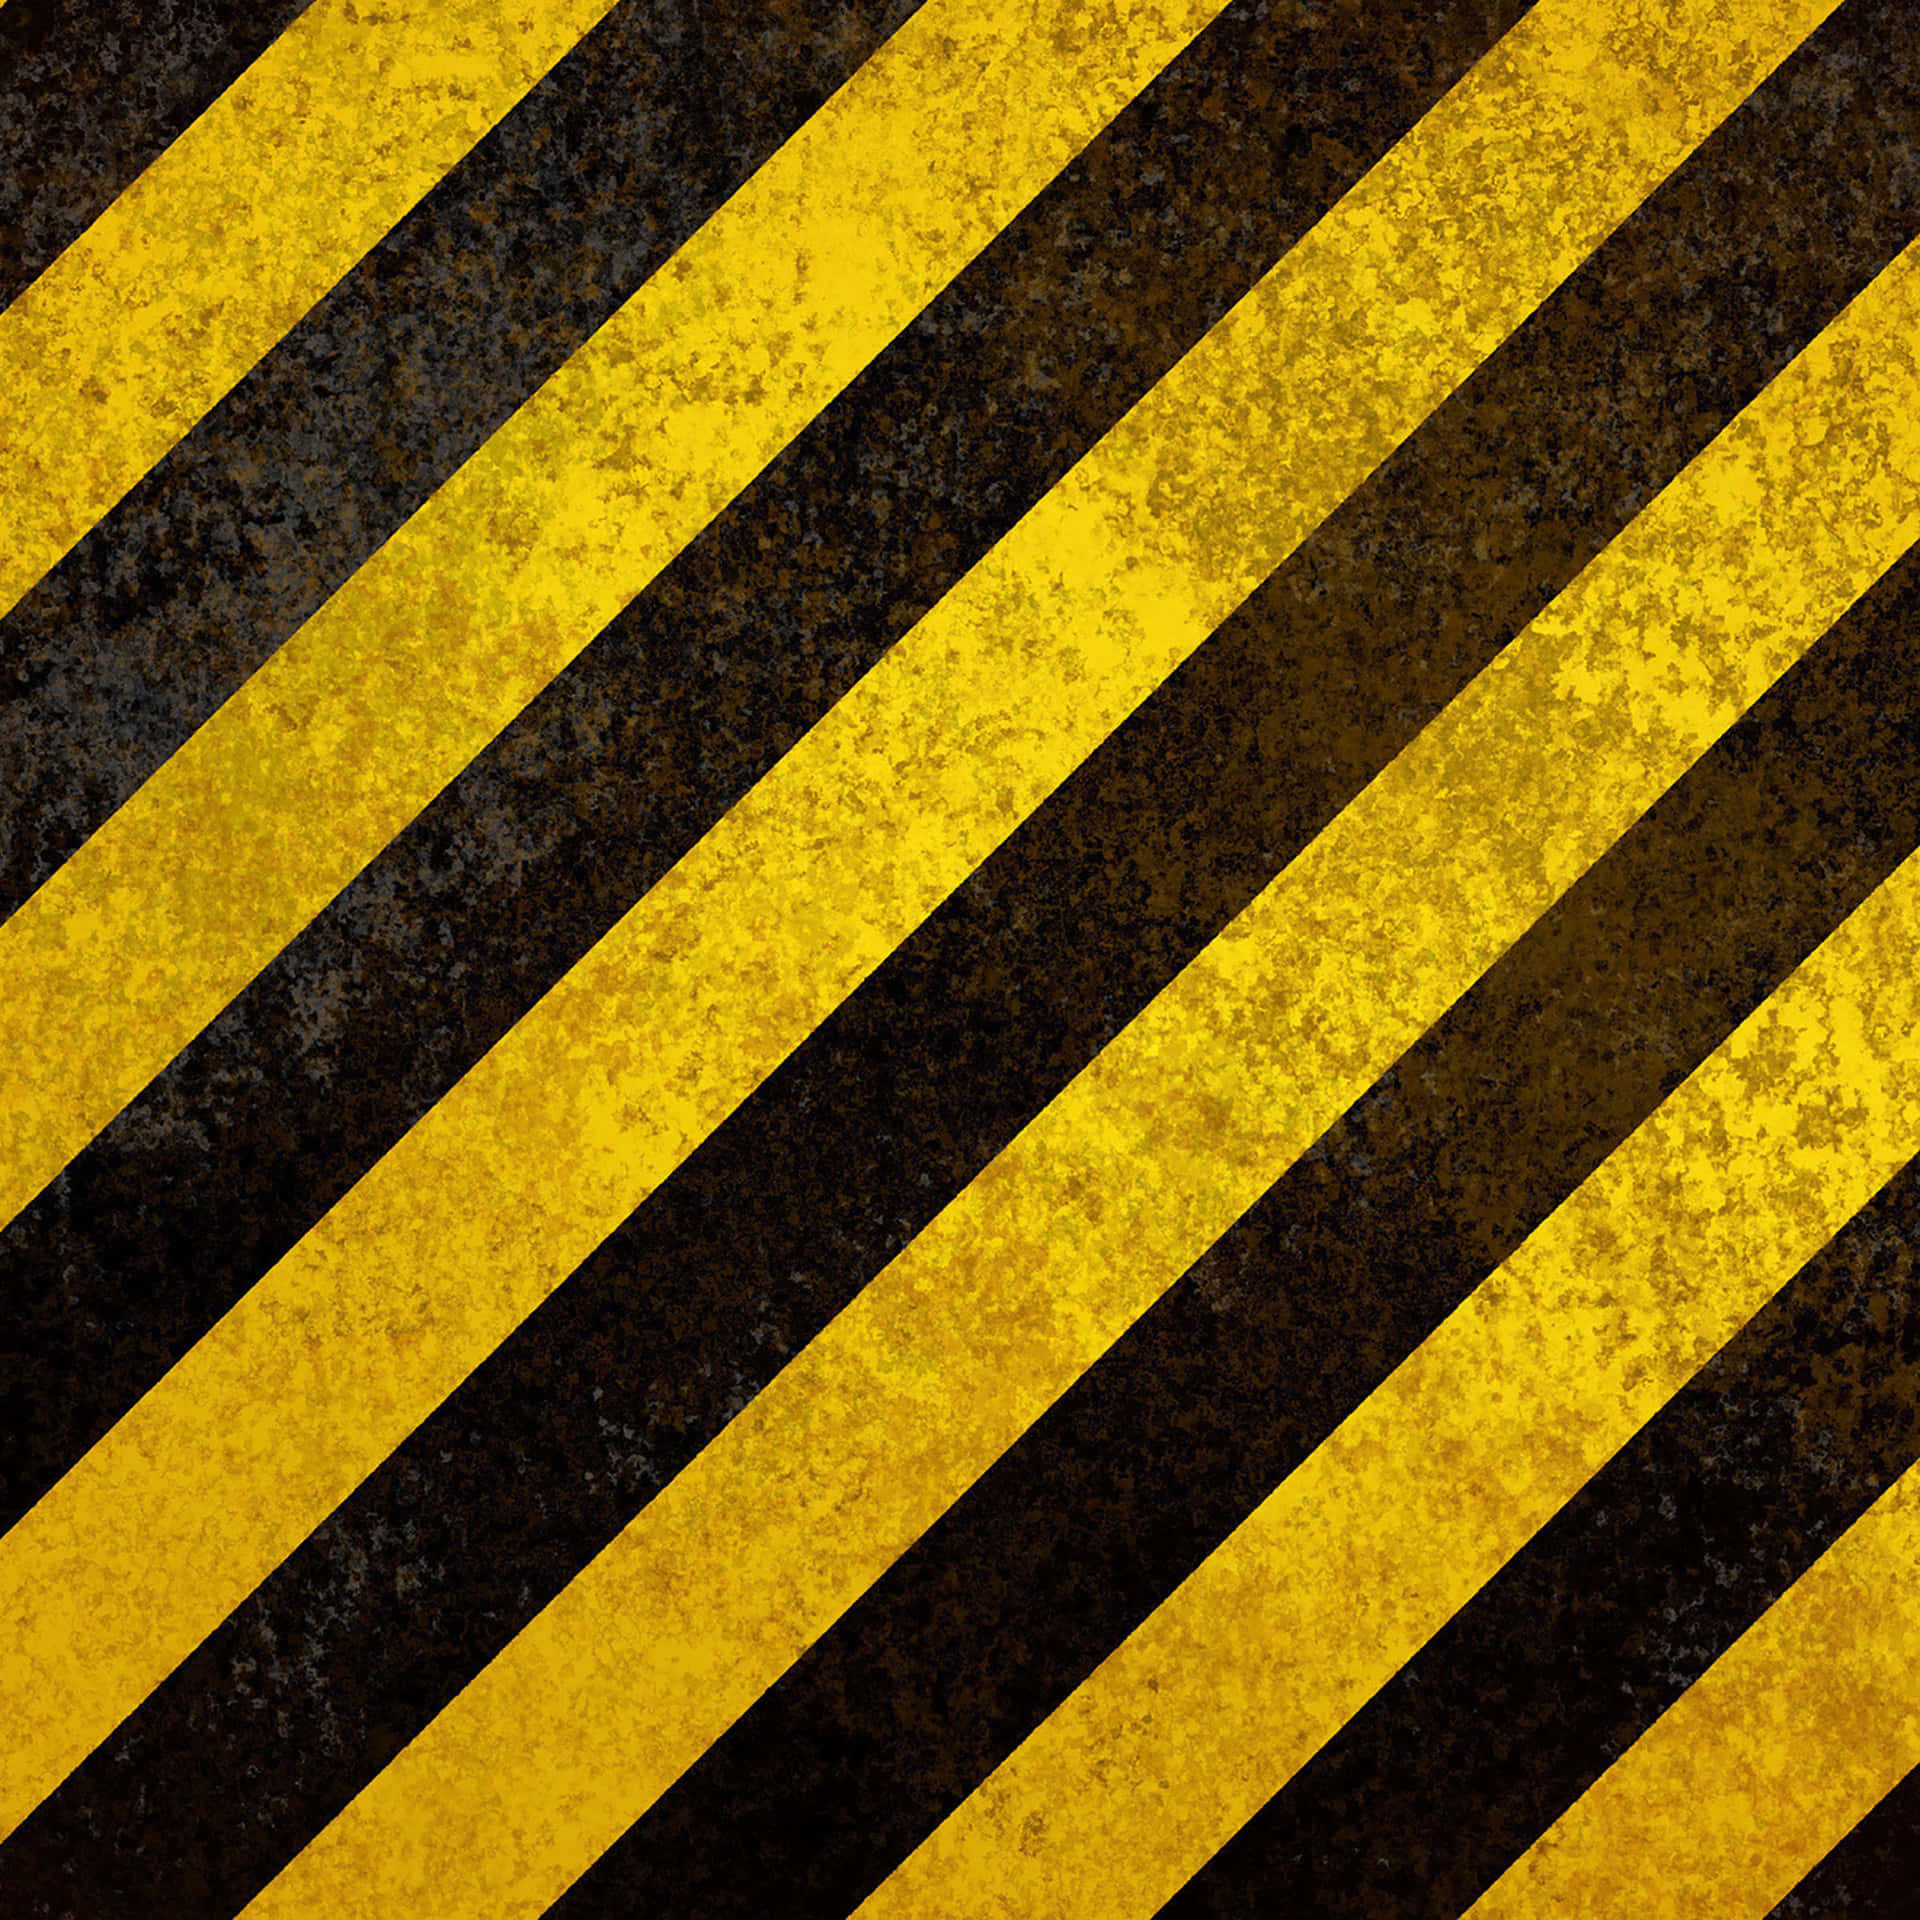 Yellow Crossing Ipad Wallpaper